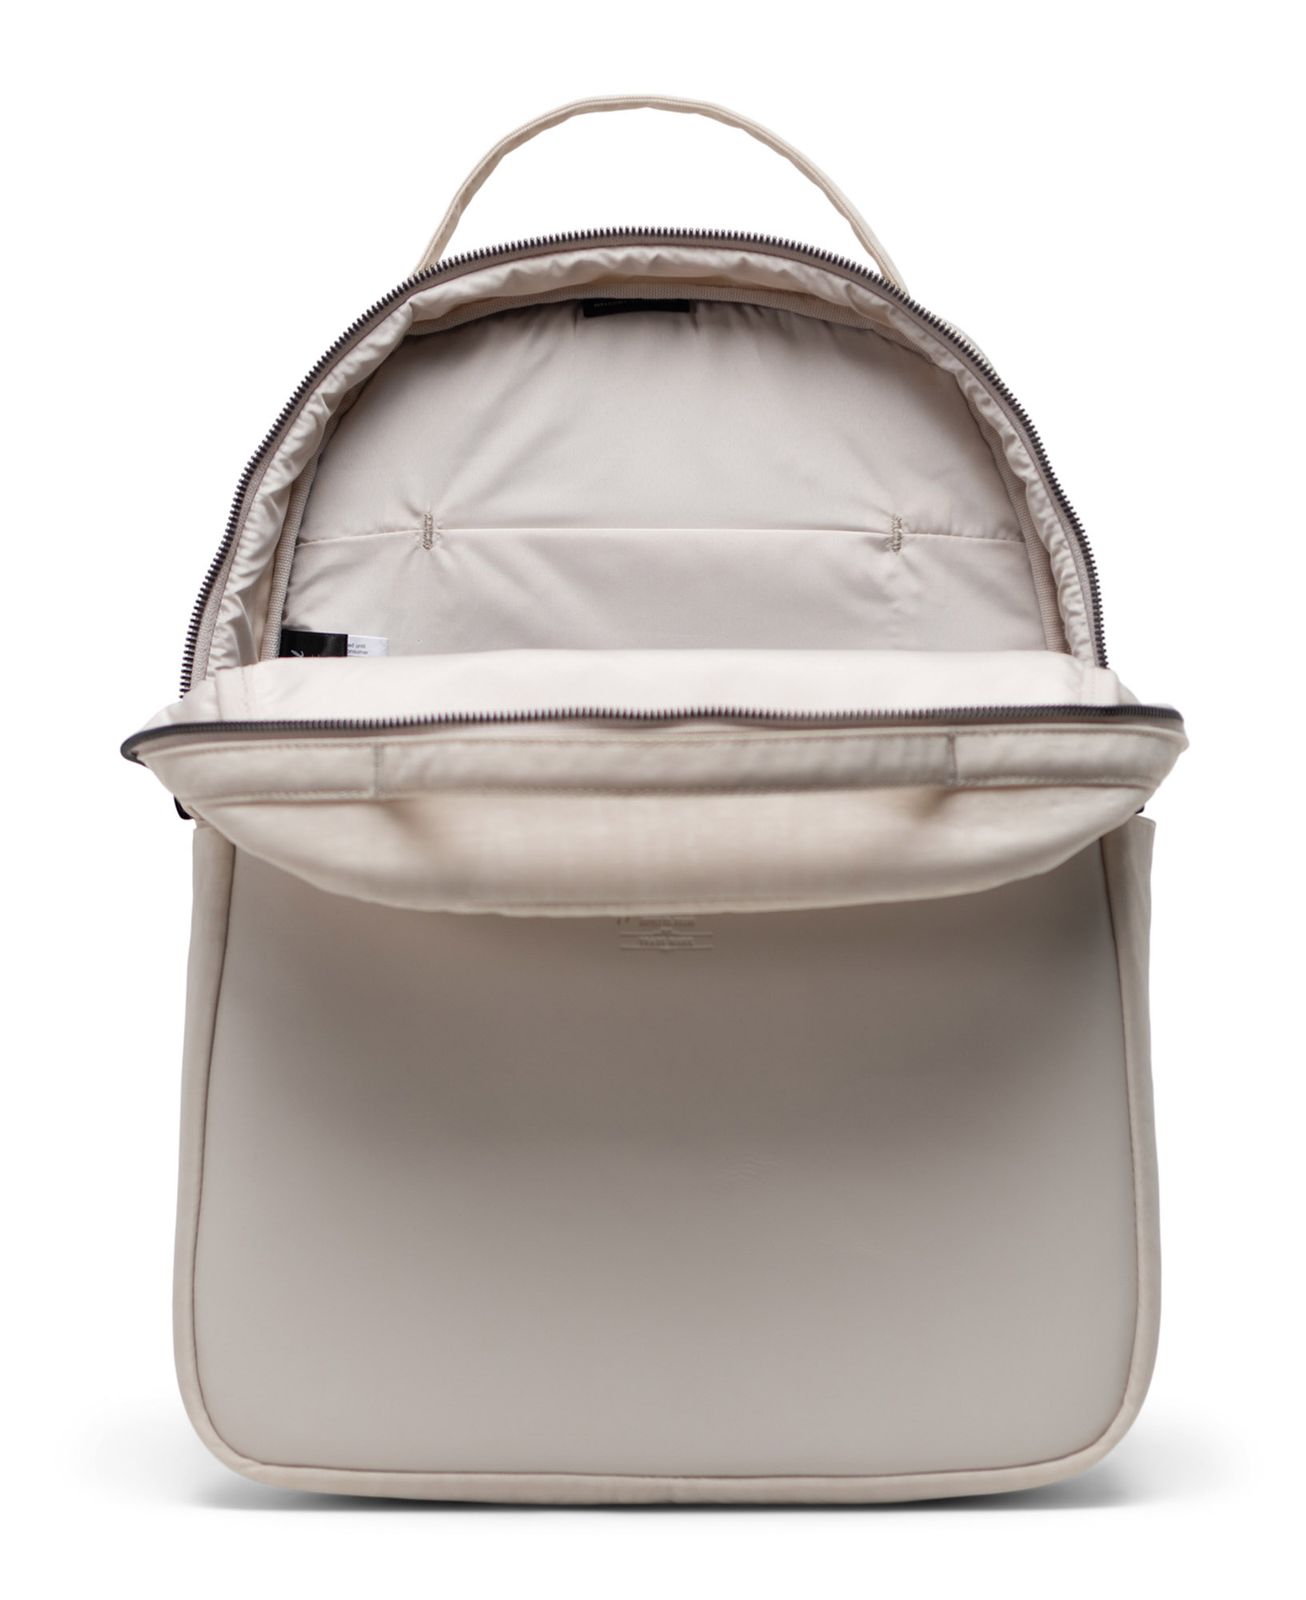 Herschel Mid-Volume Backpack Moonbeam | Buy bags, purses & accessories ...